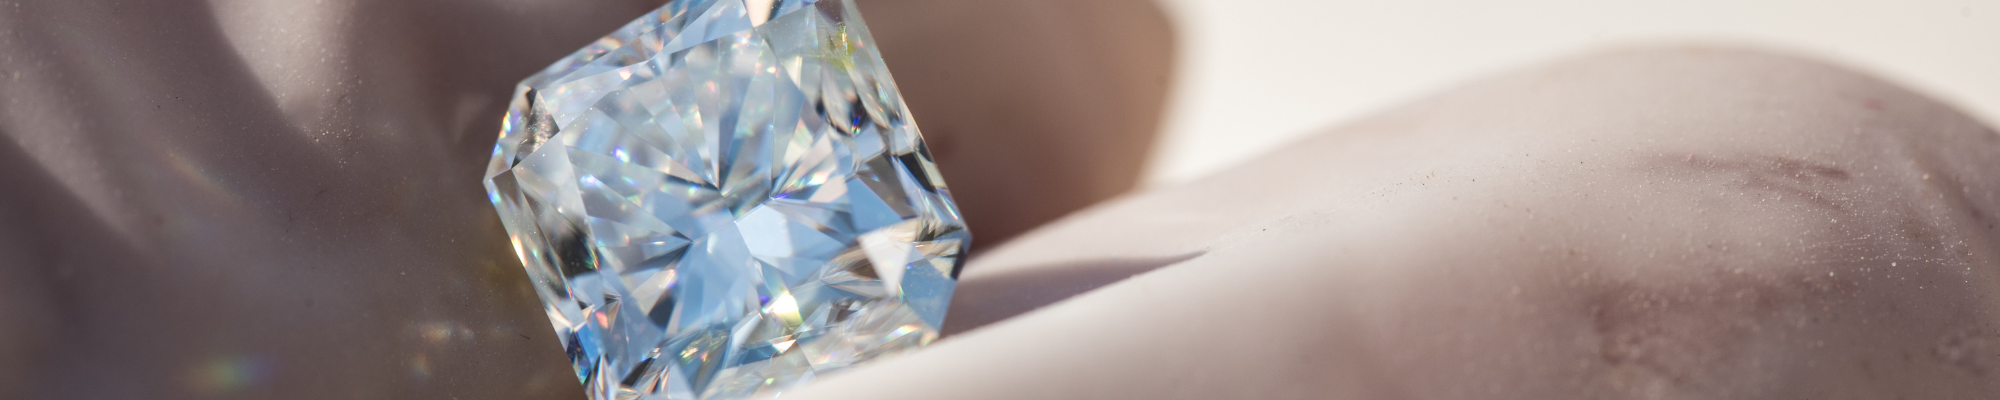 The 10 biggest diamonds in the world